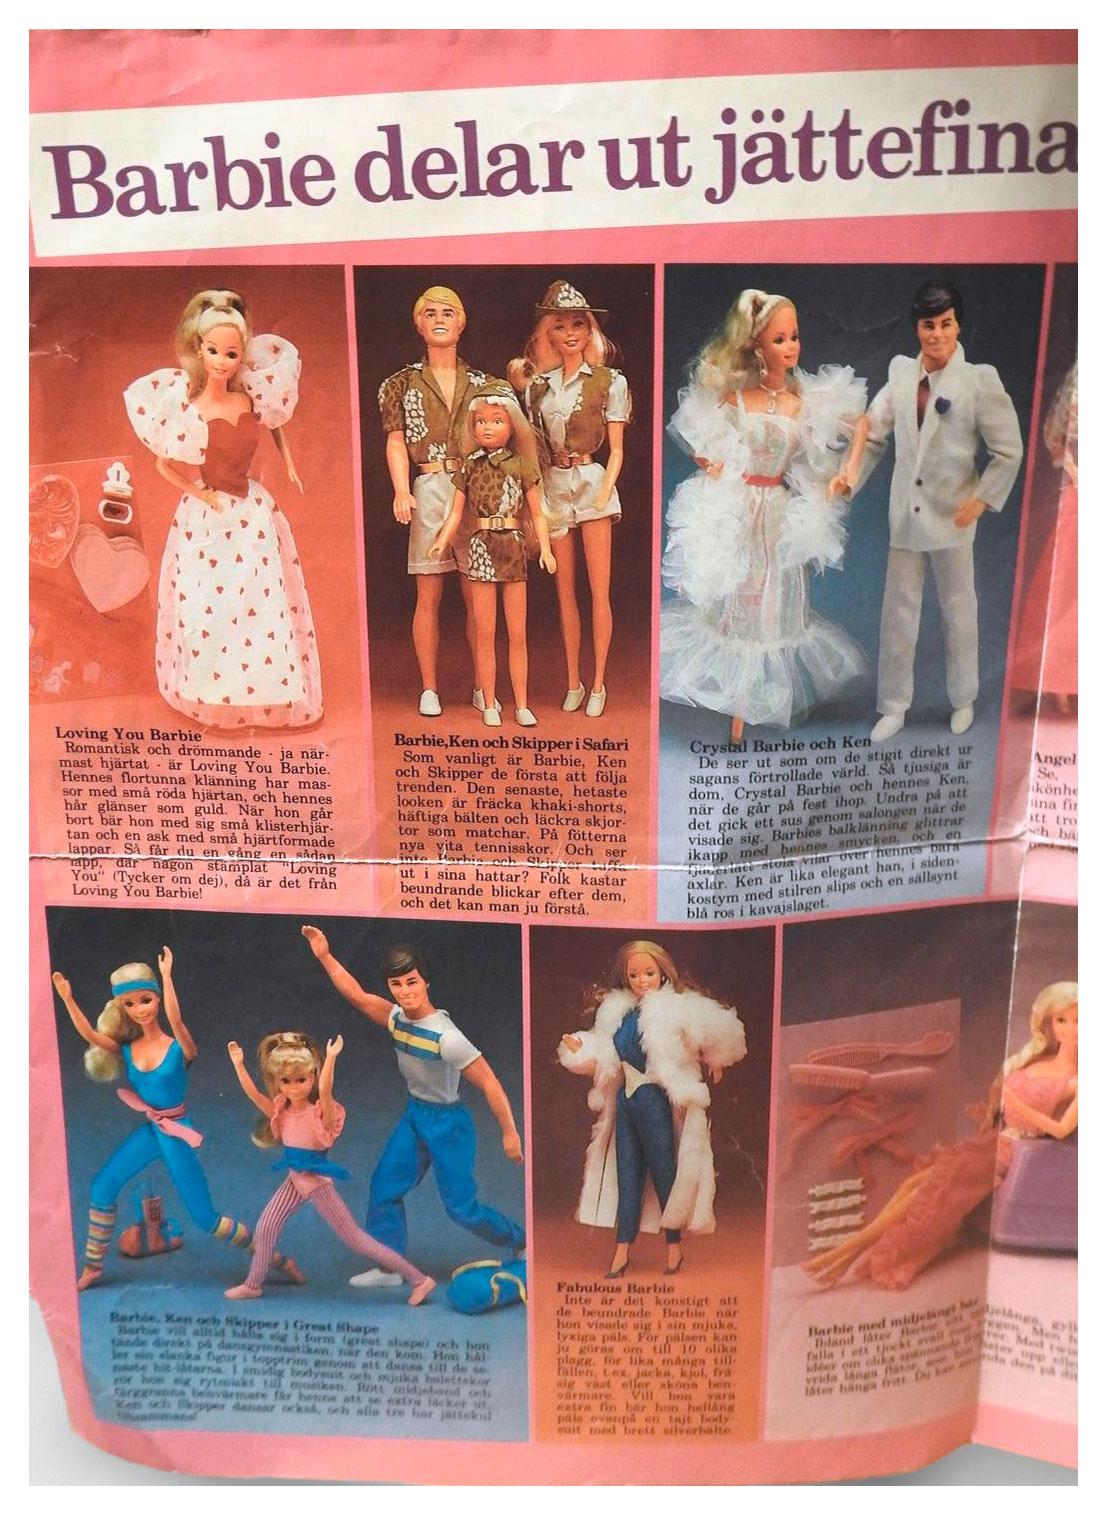 From 1984 Swedish Barbie brochure